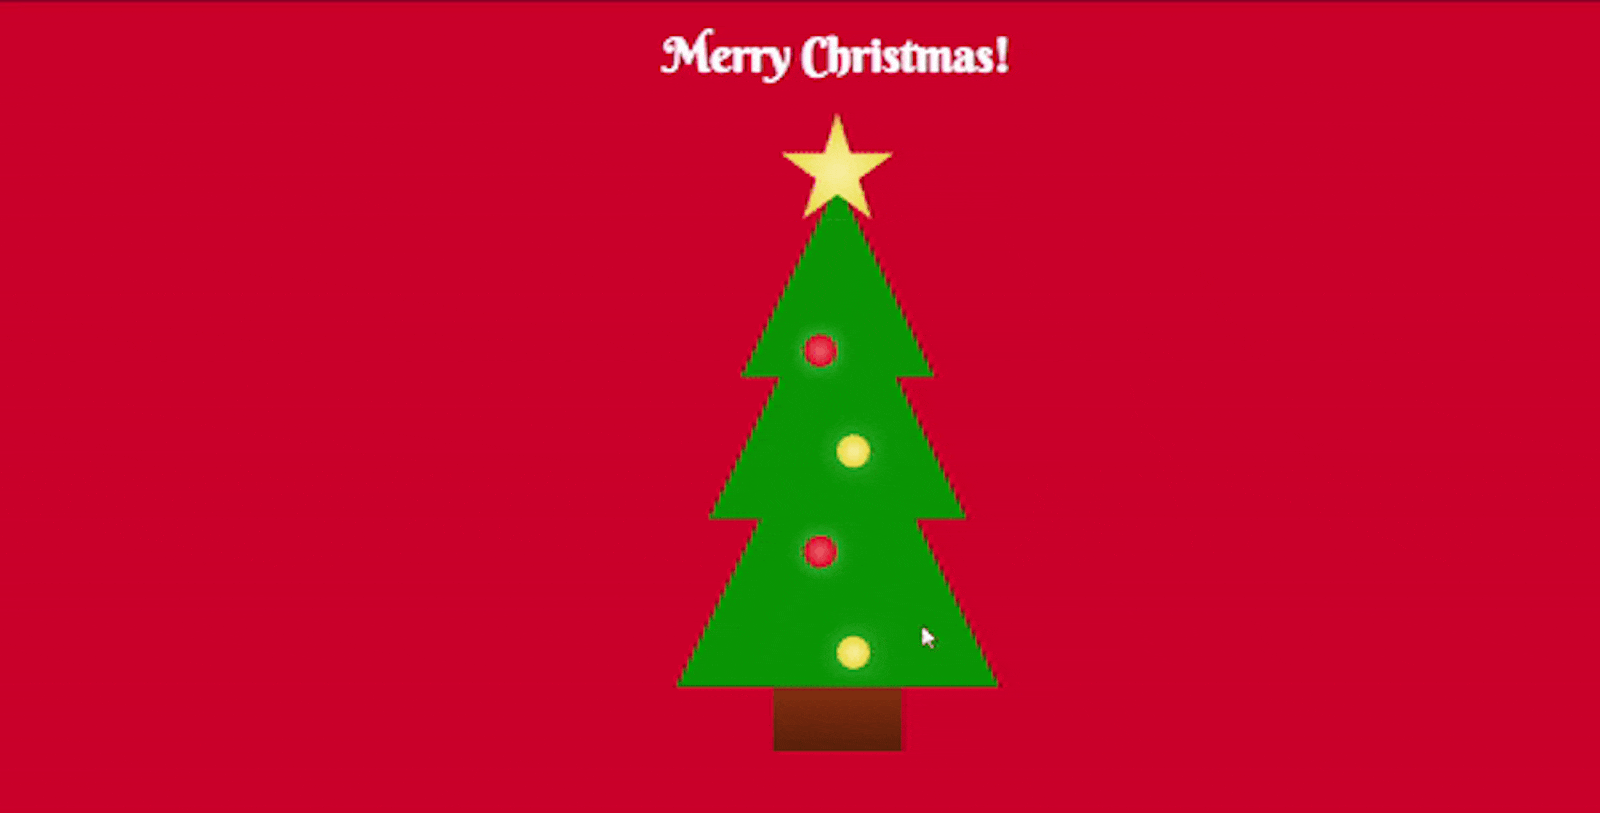 Creating an Animated Christmas Tree with CSS